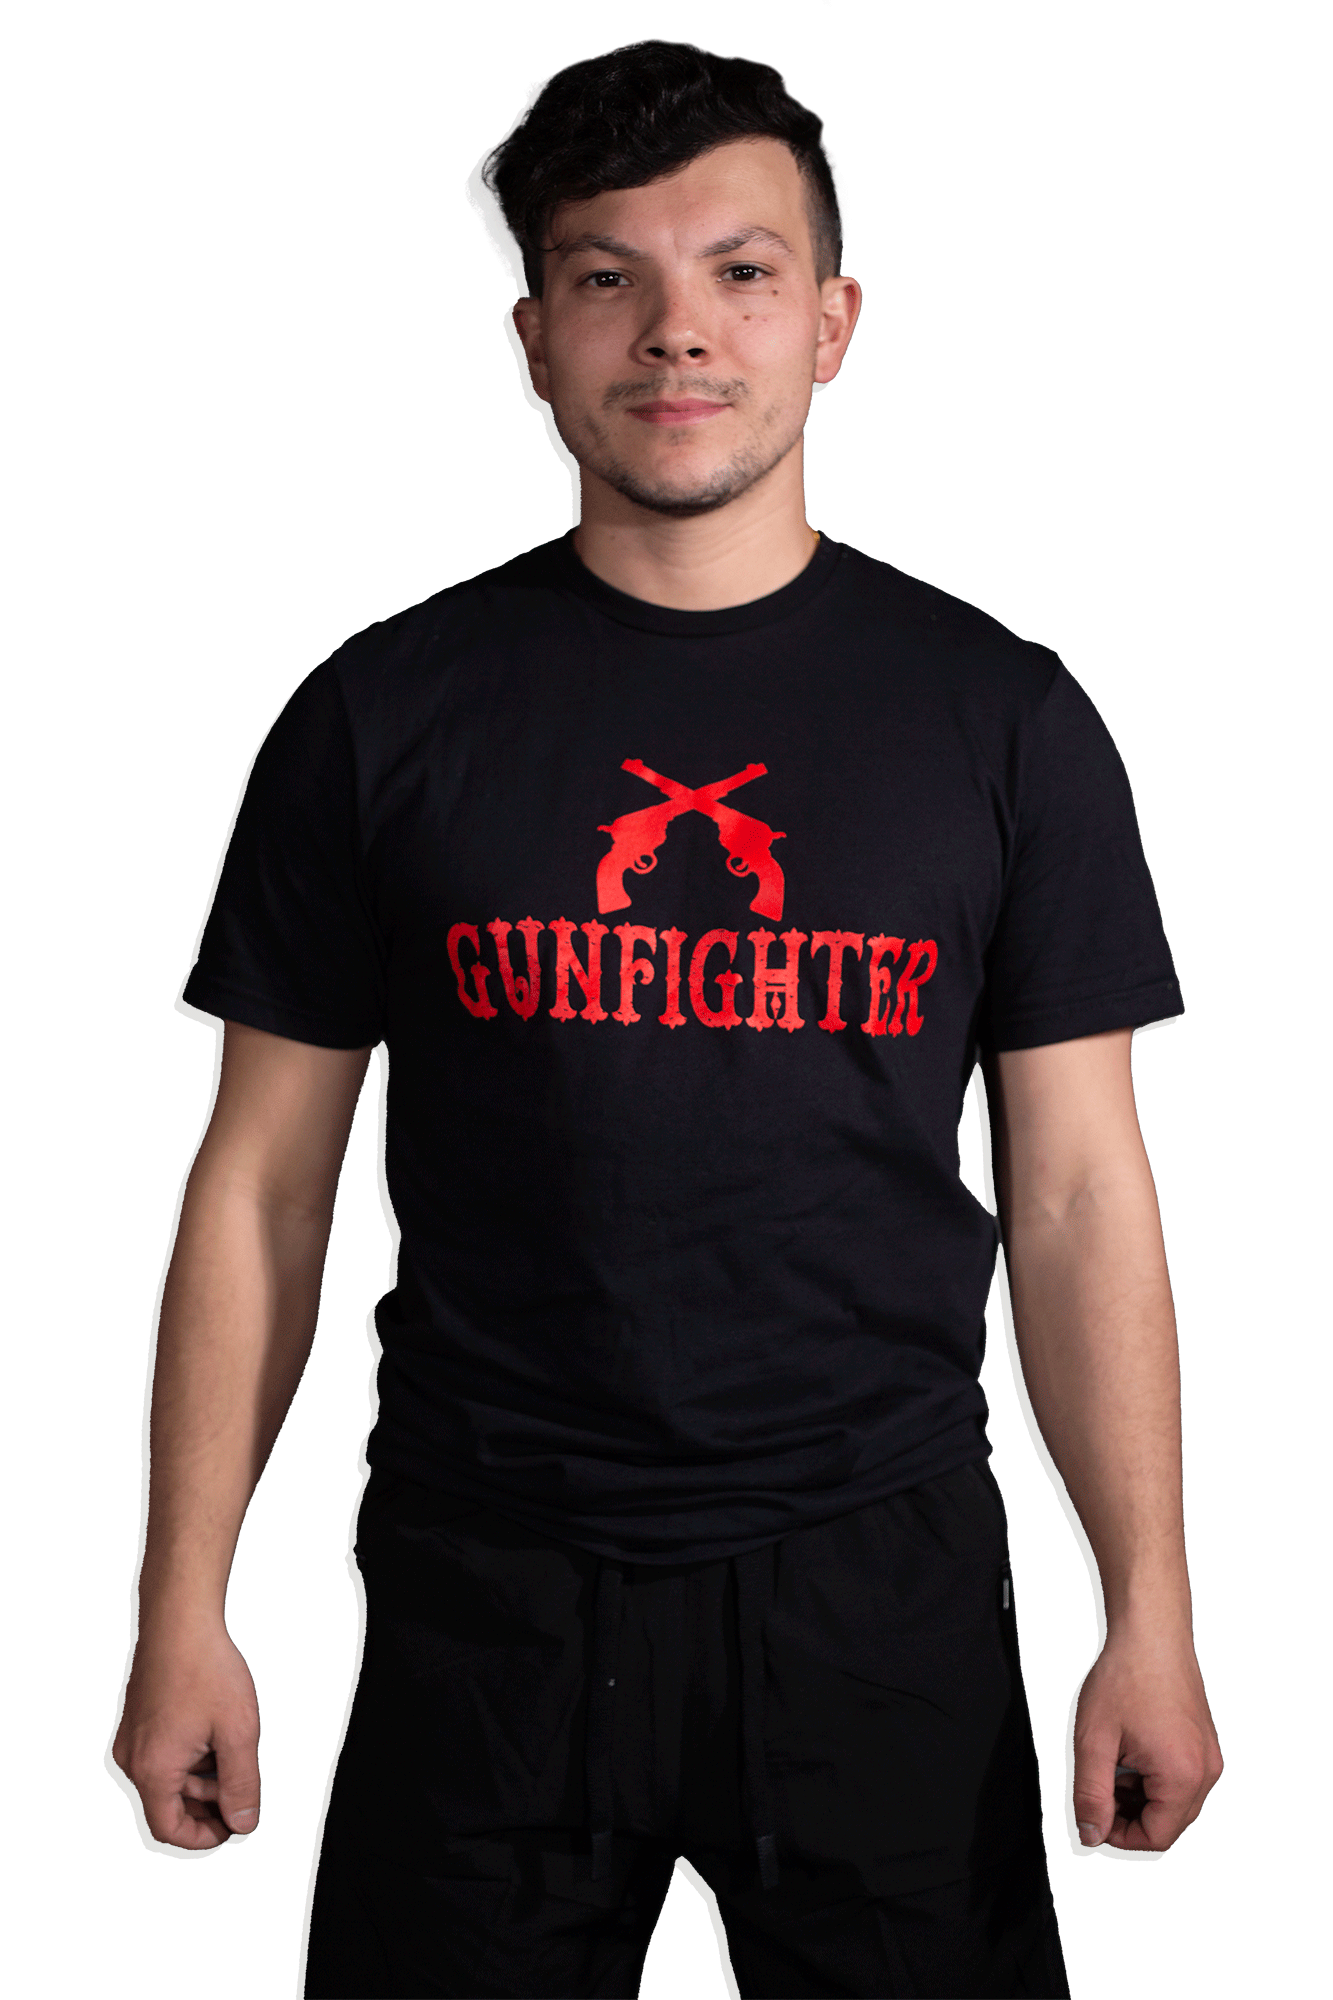 Gunfighter Sports Tee Shirt - Black/ Red